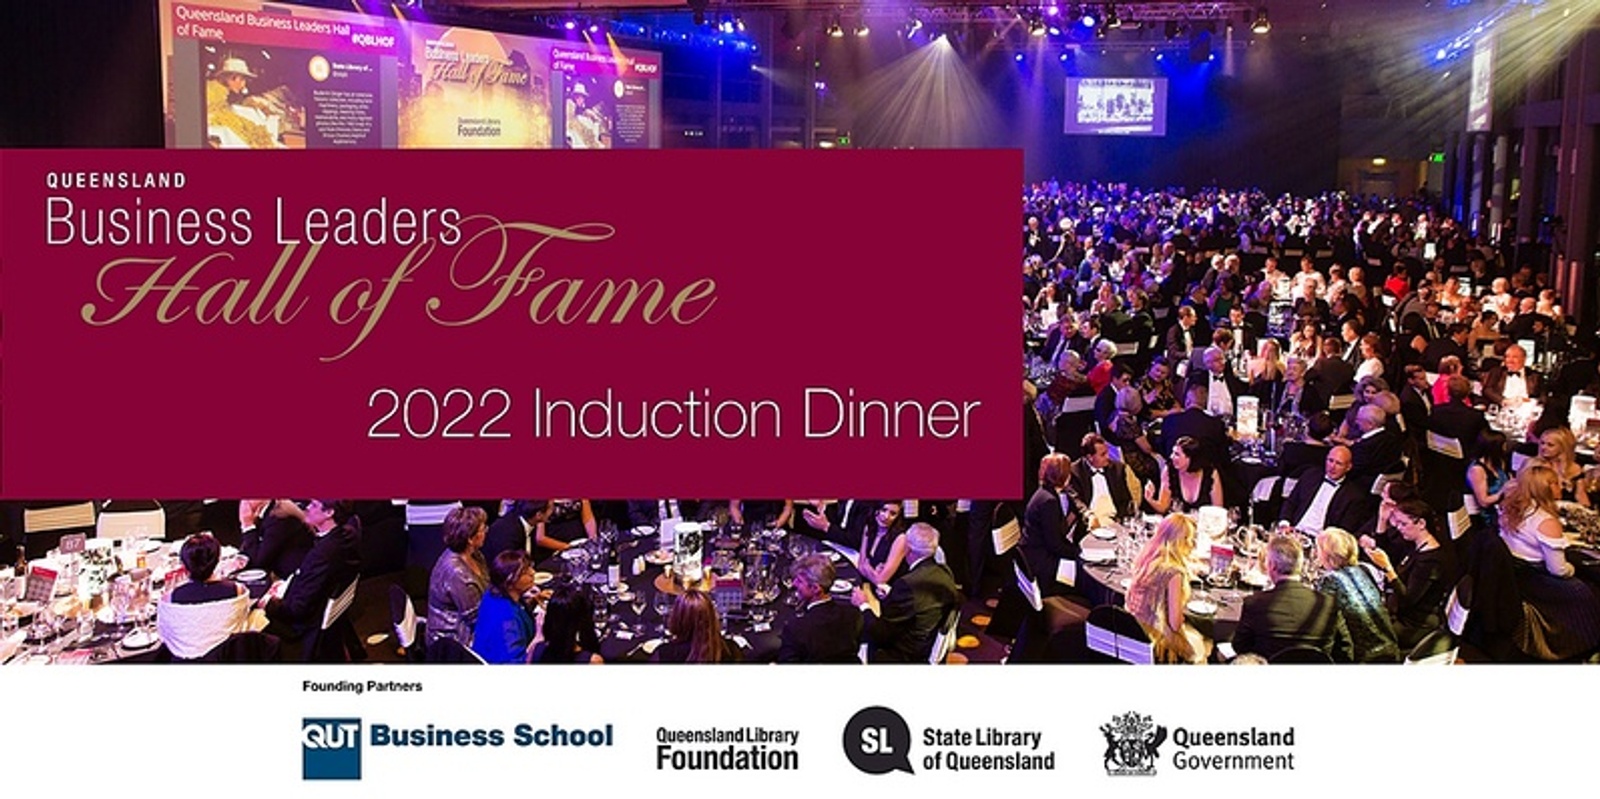 Banner image for Queensland Business Leaders Hall of Fame Induction Dinner